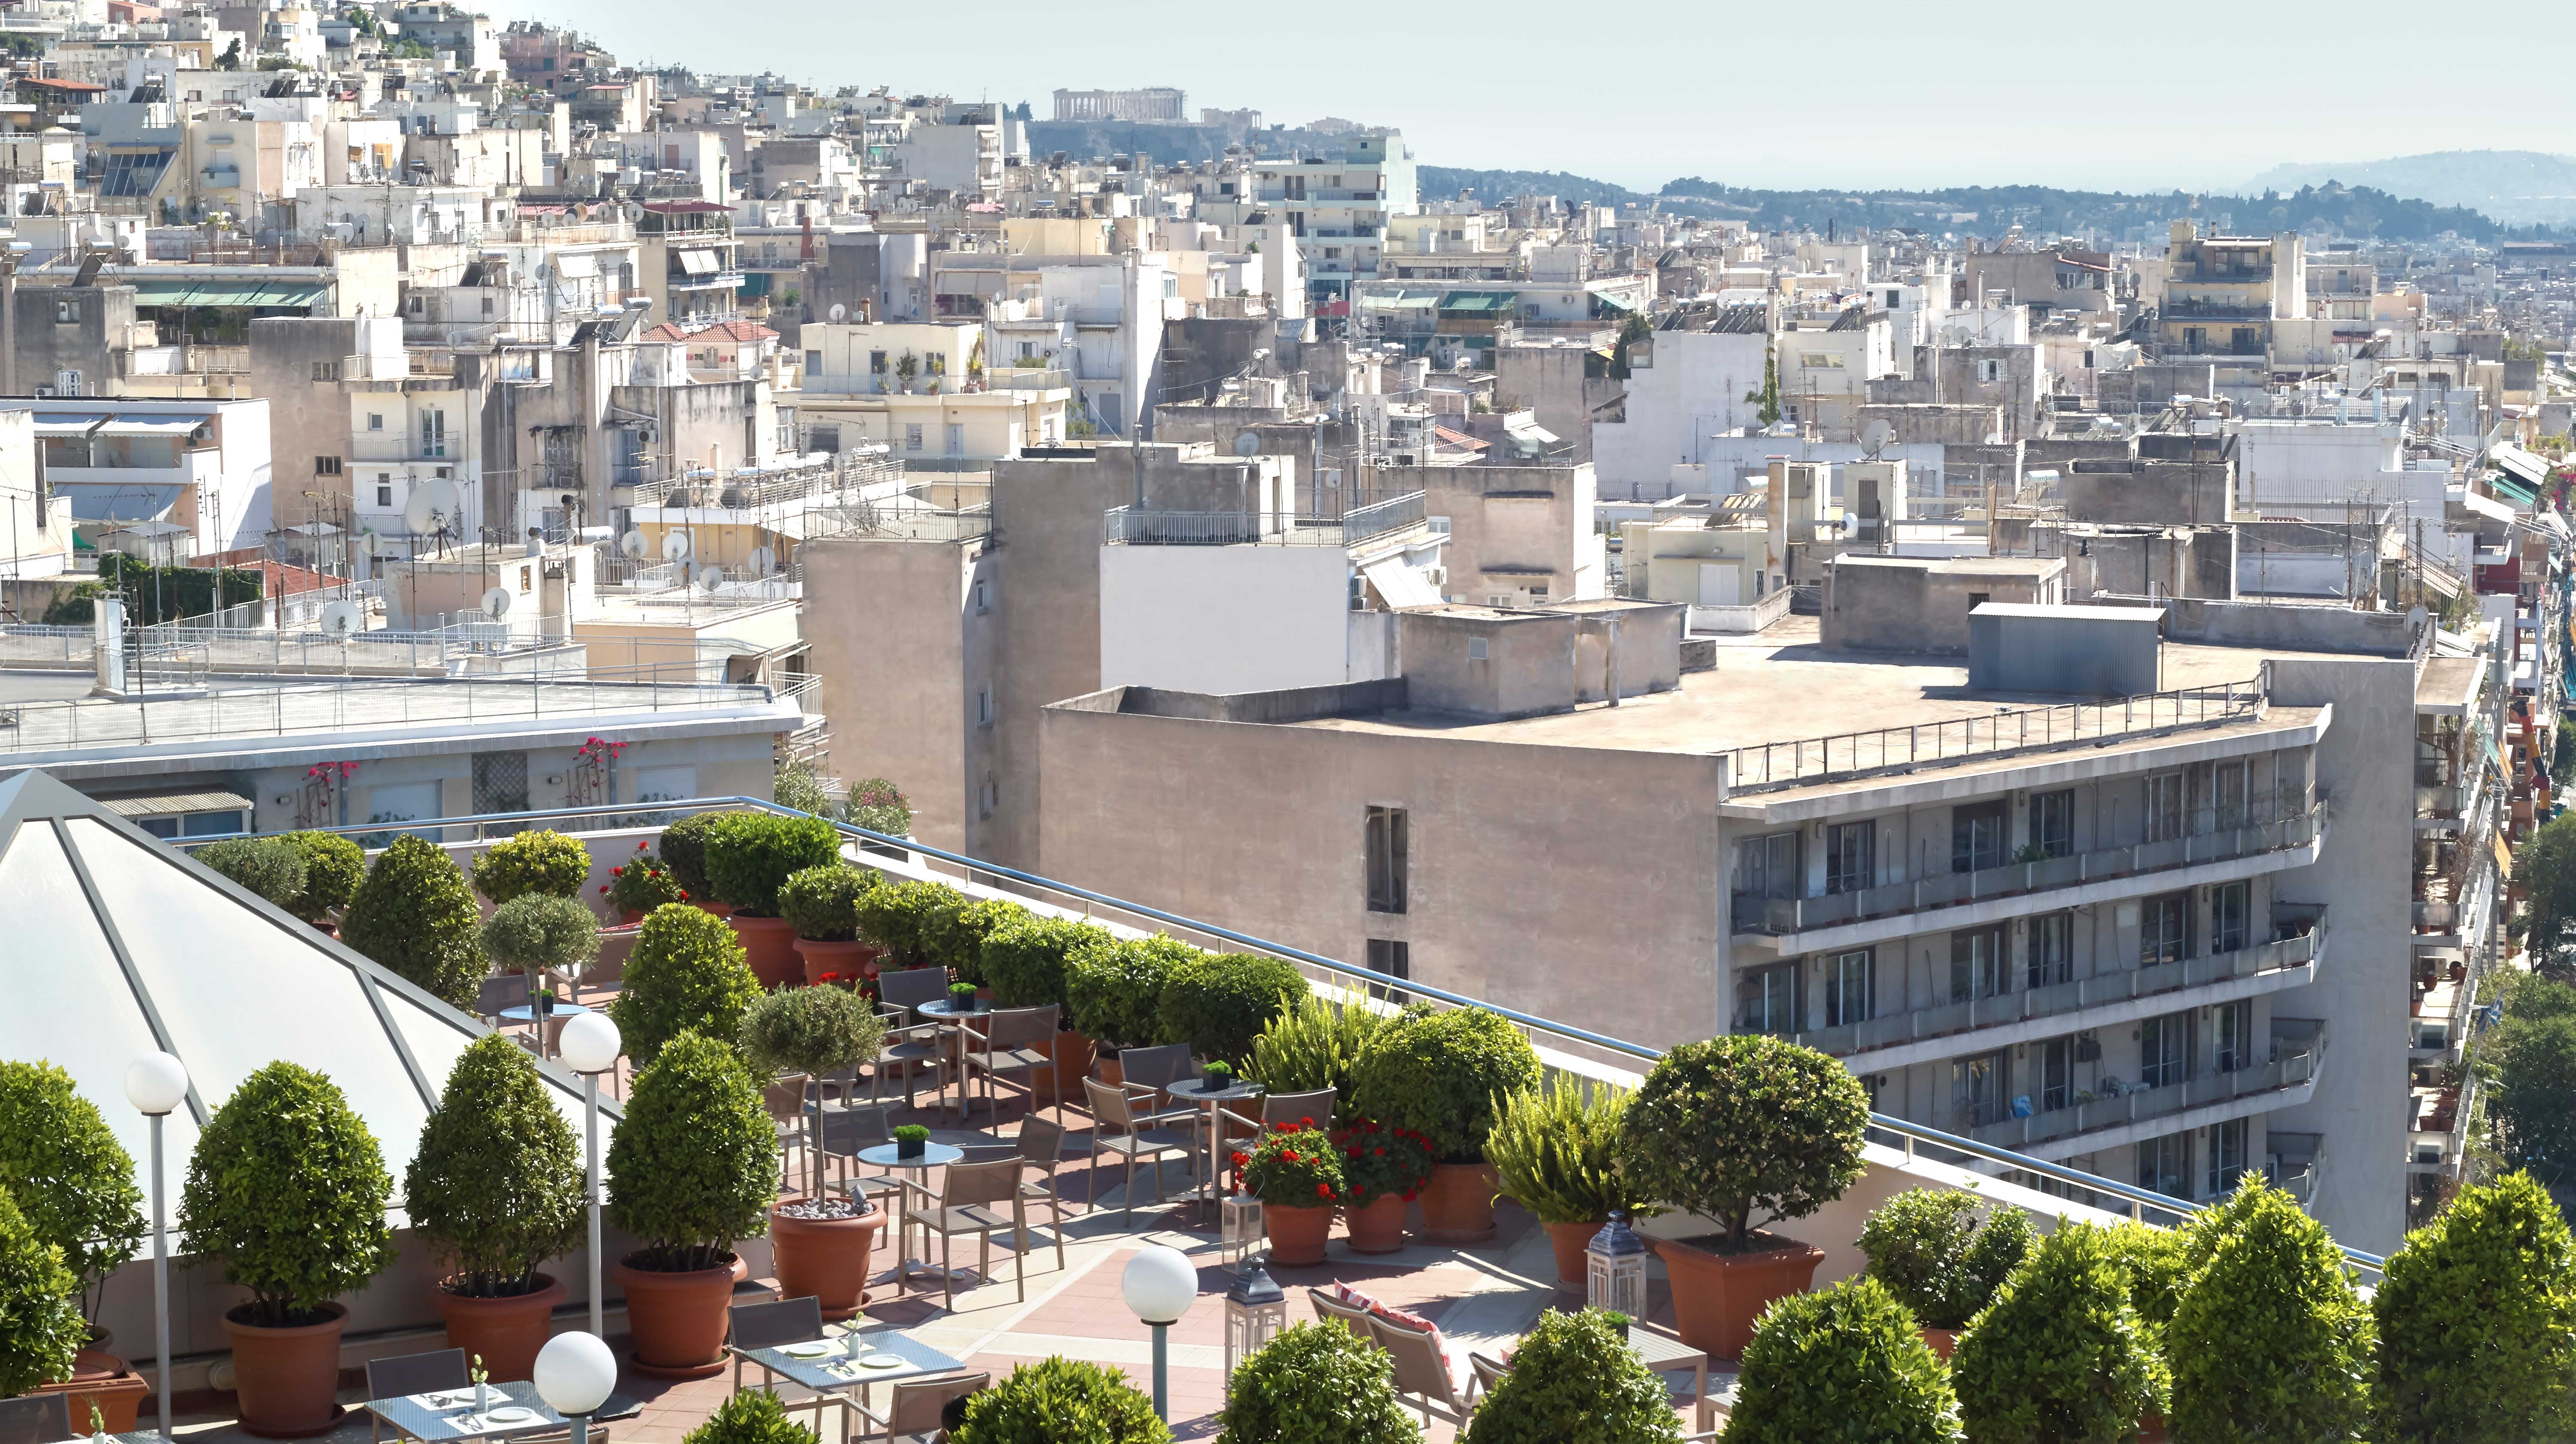 athens-zafolia-hotel-roof-garden-drone-acropolis-.jpg